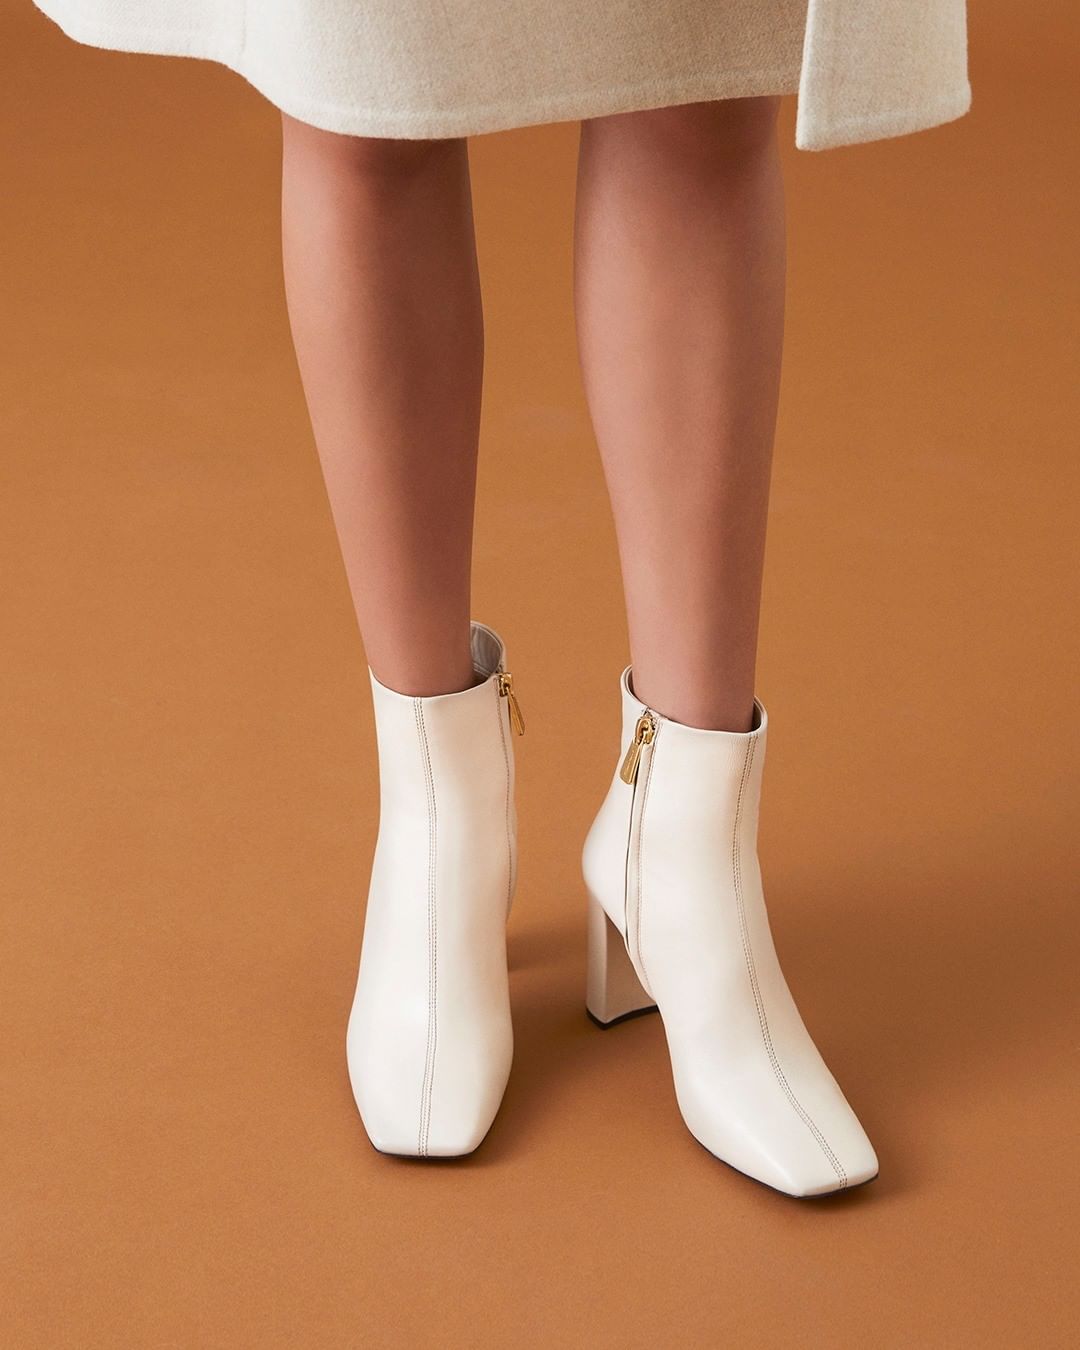 Santoni - An ankle boot with an elegant square toe, for a return to '50s glamour. #Santoni #SantoniFW20 #MadeinSantoni